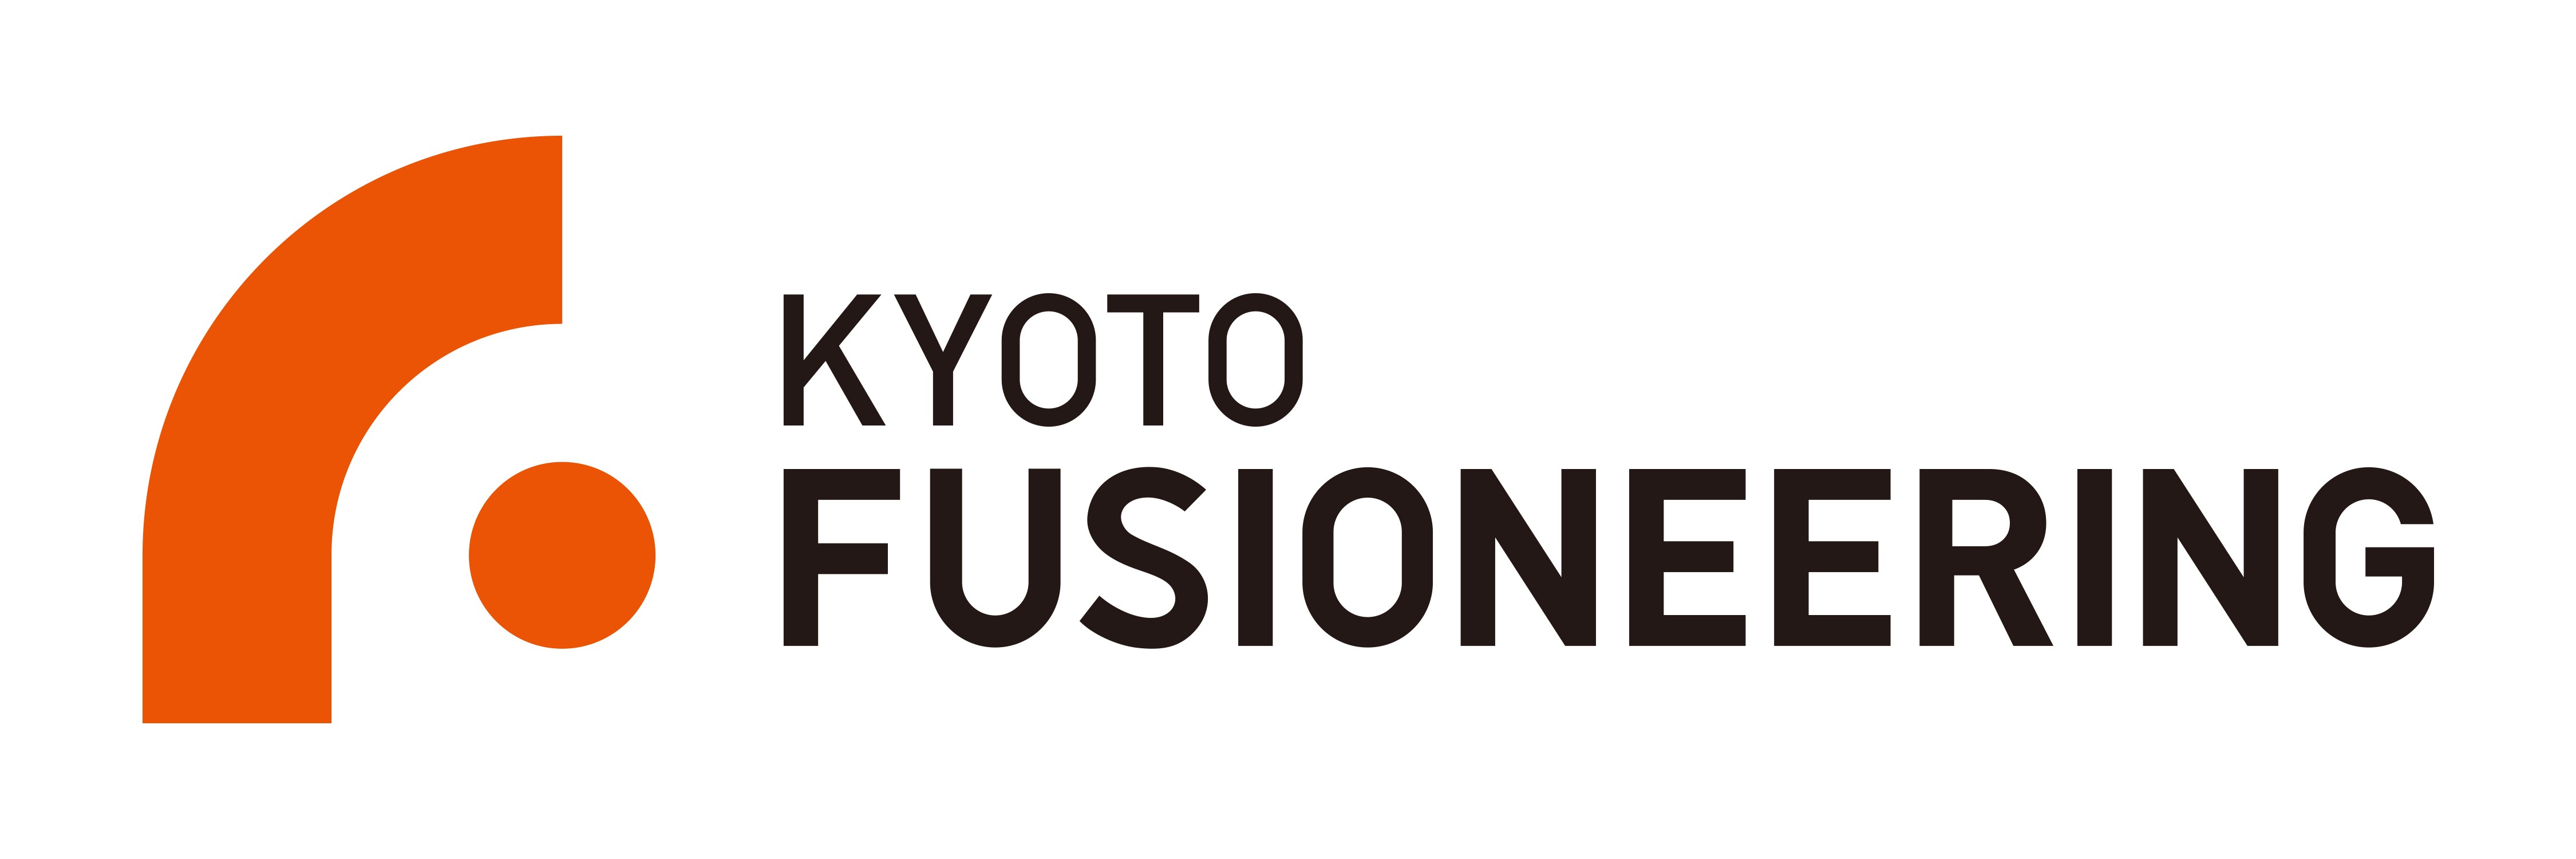 kyoto fusioneering | linkedin